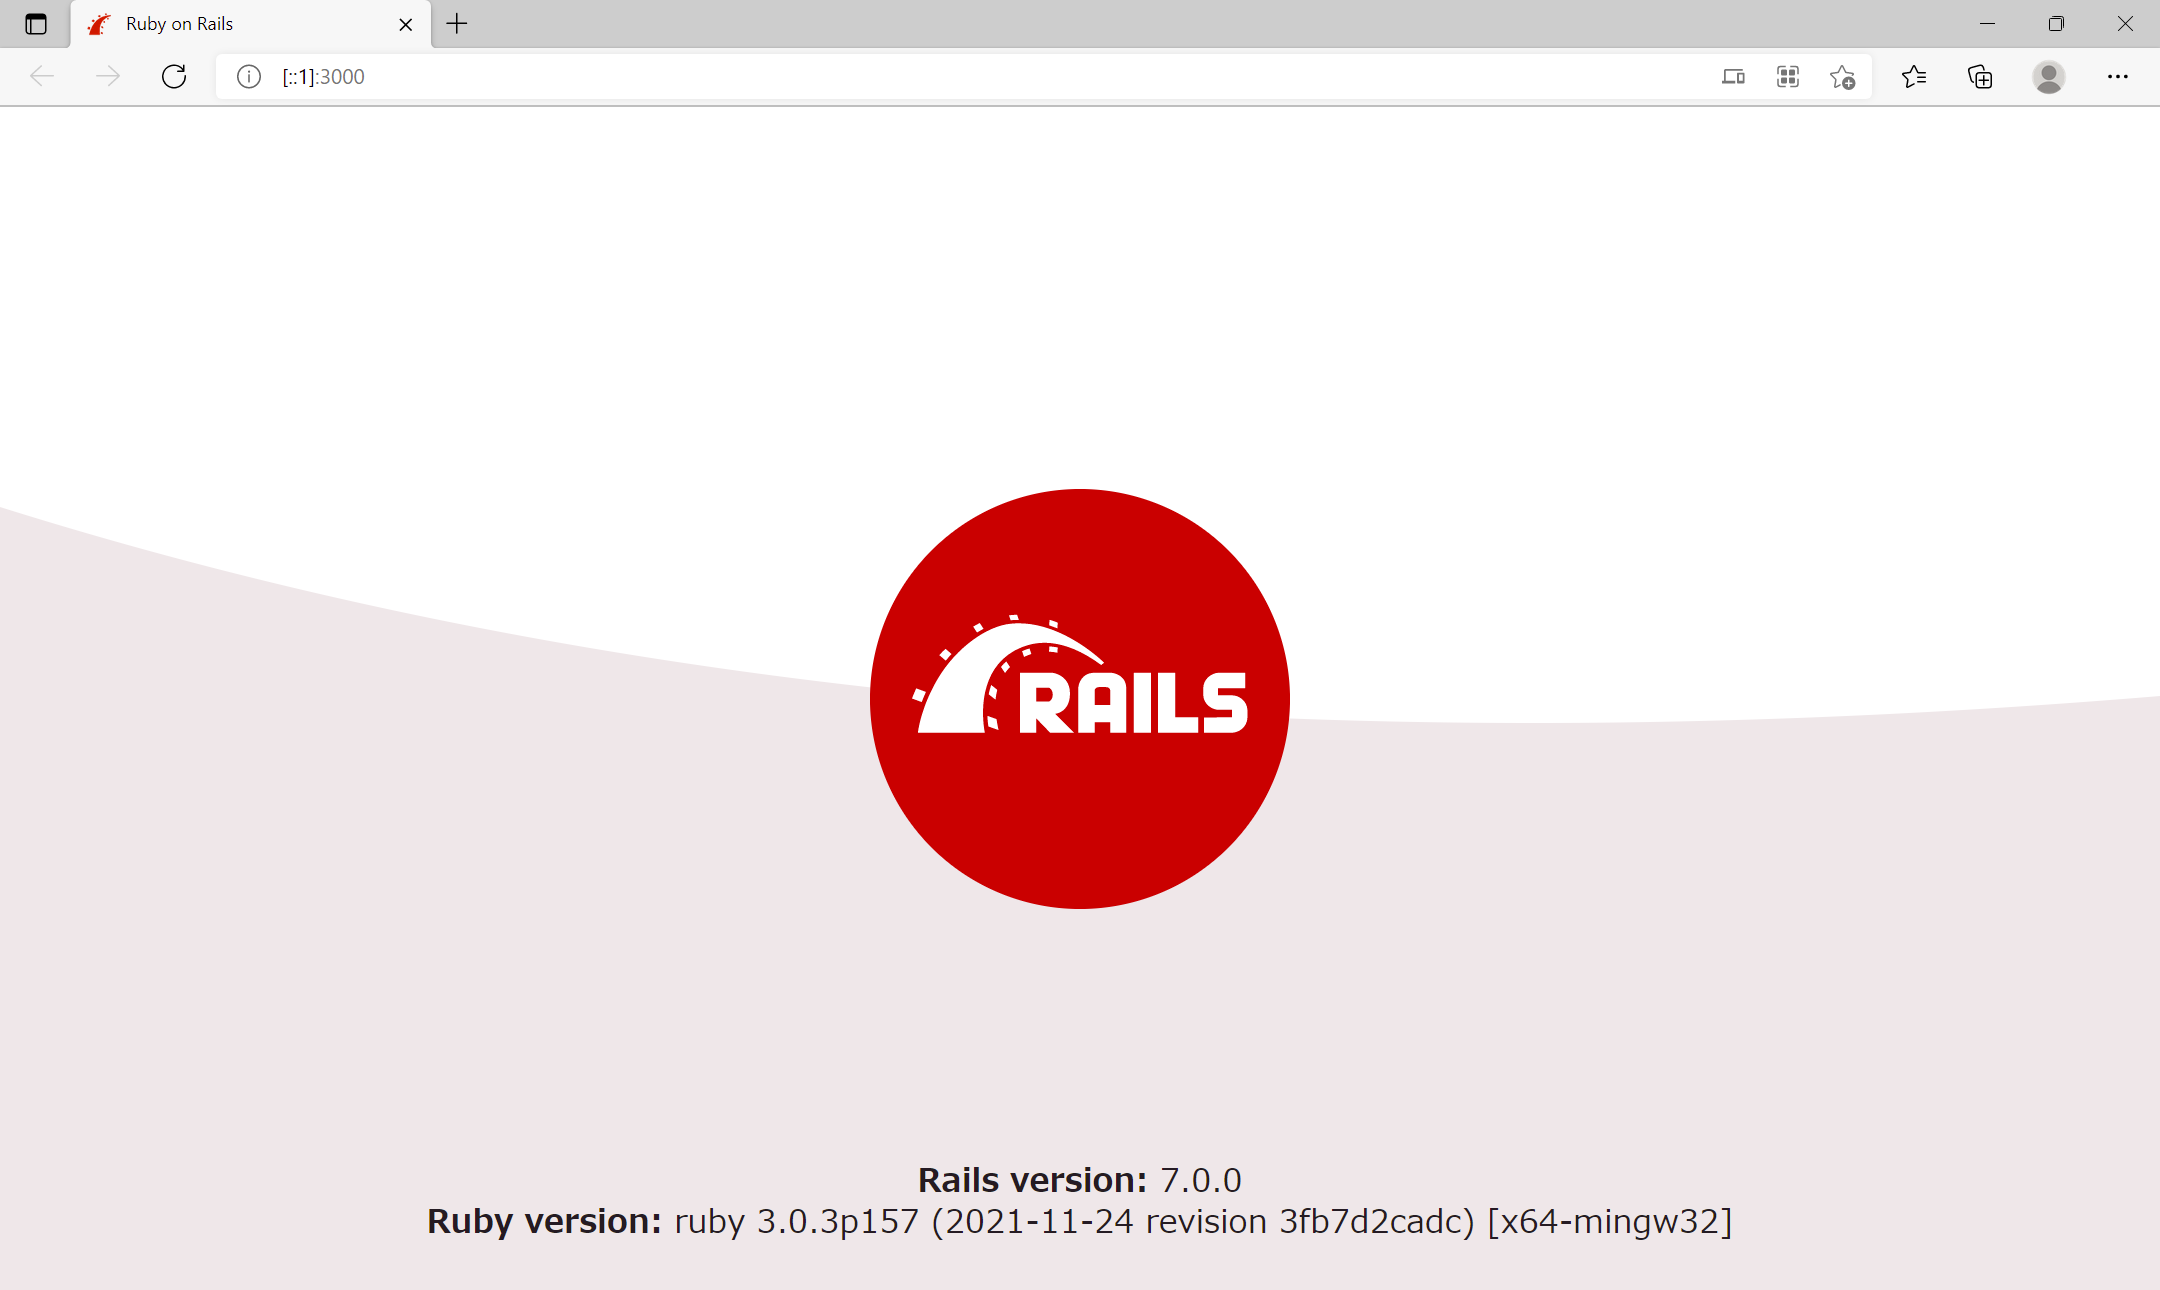 Railsアプリの実行をブラウザ上で確認